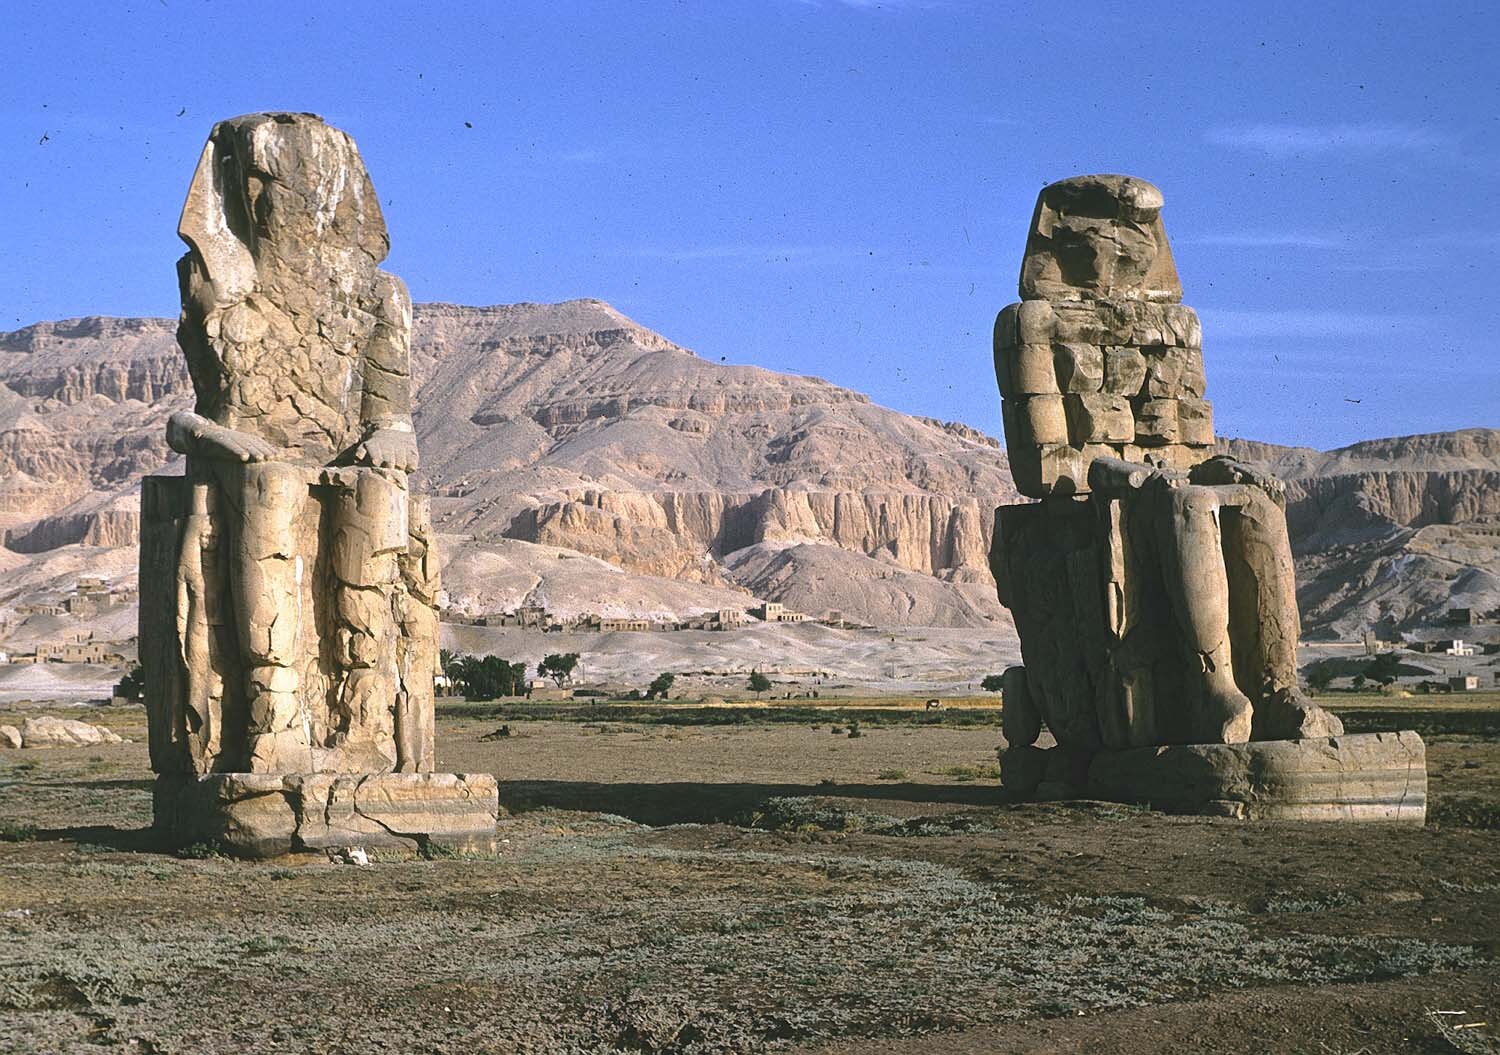 Metz 10 - 1961 - Egypt two statues - Metz101 - 8 M.jpg